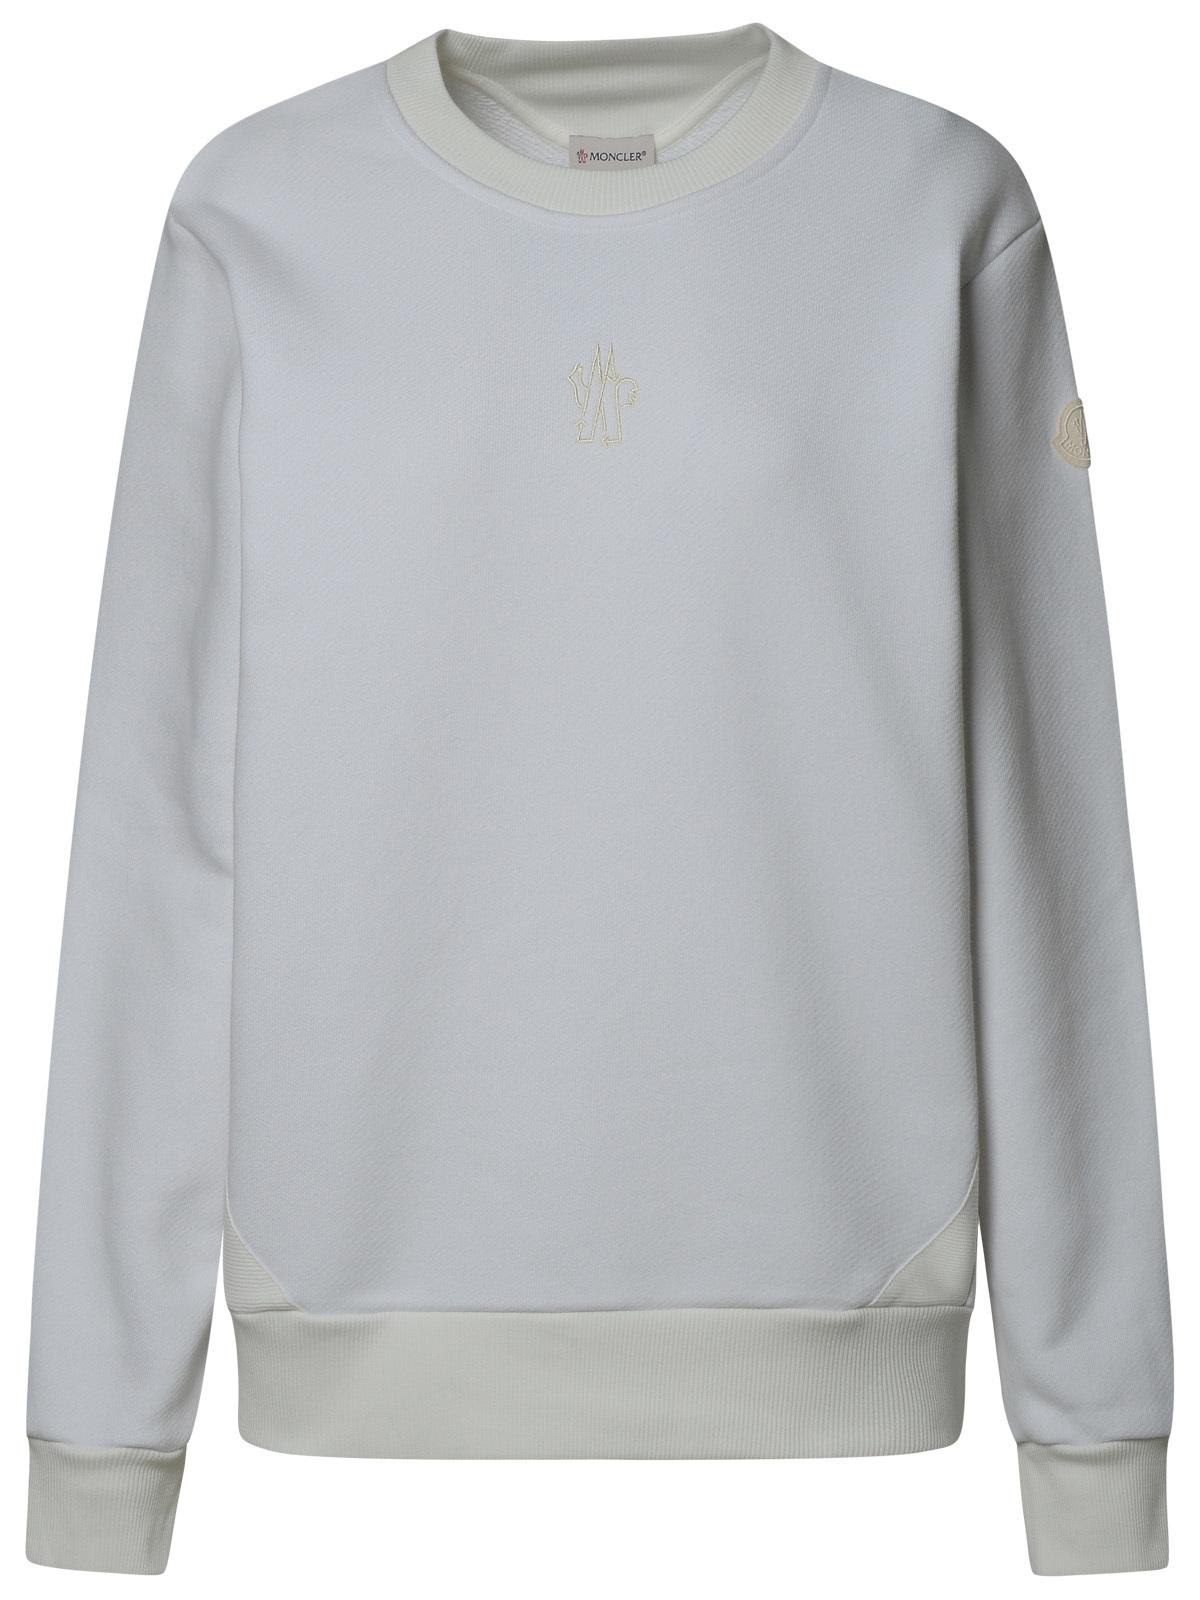 Moncler White Cotton Sweatshirt